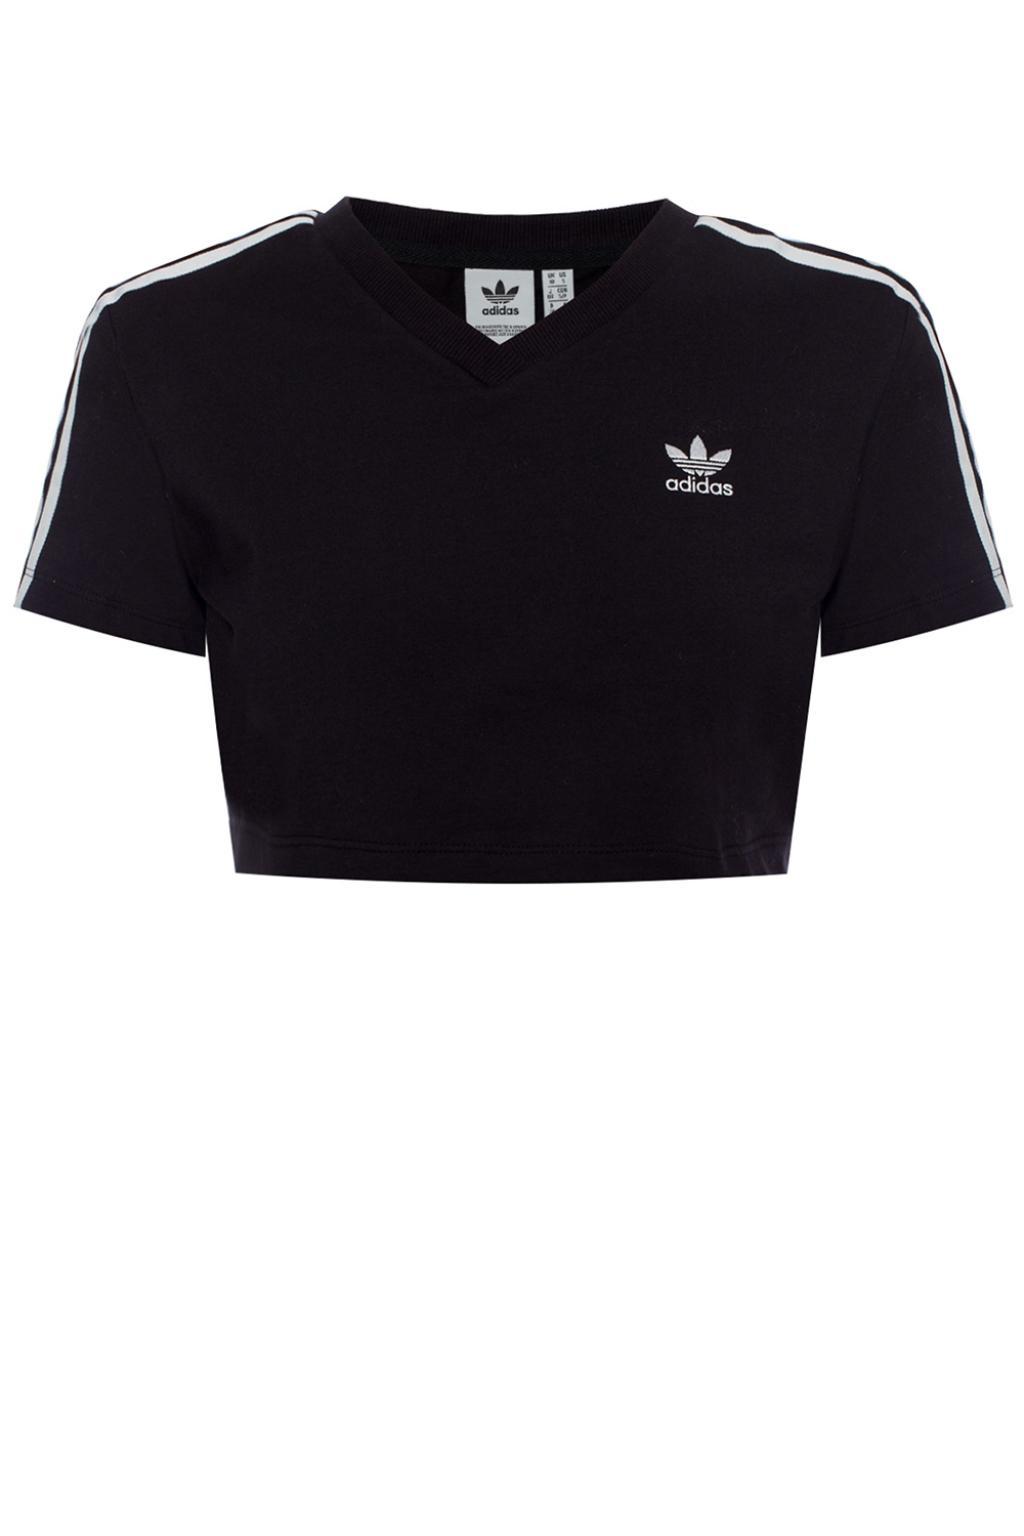 adidas Originals Cotton Cropped Logo T-shirt in Black - Lyst